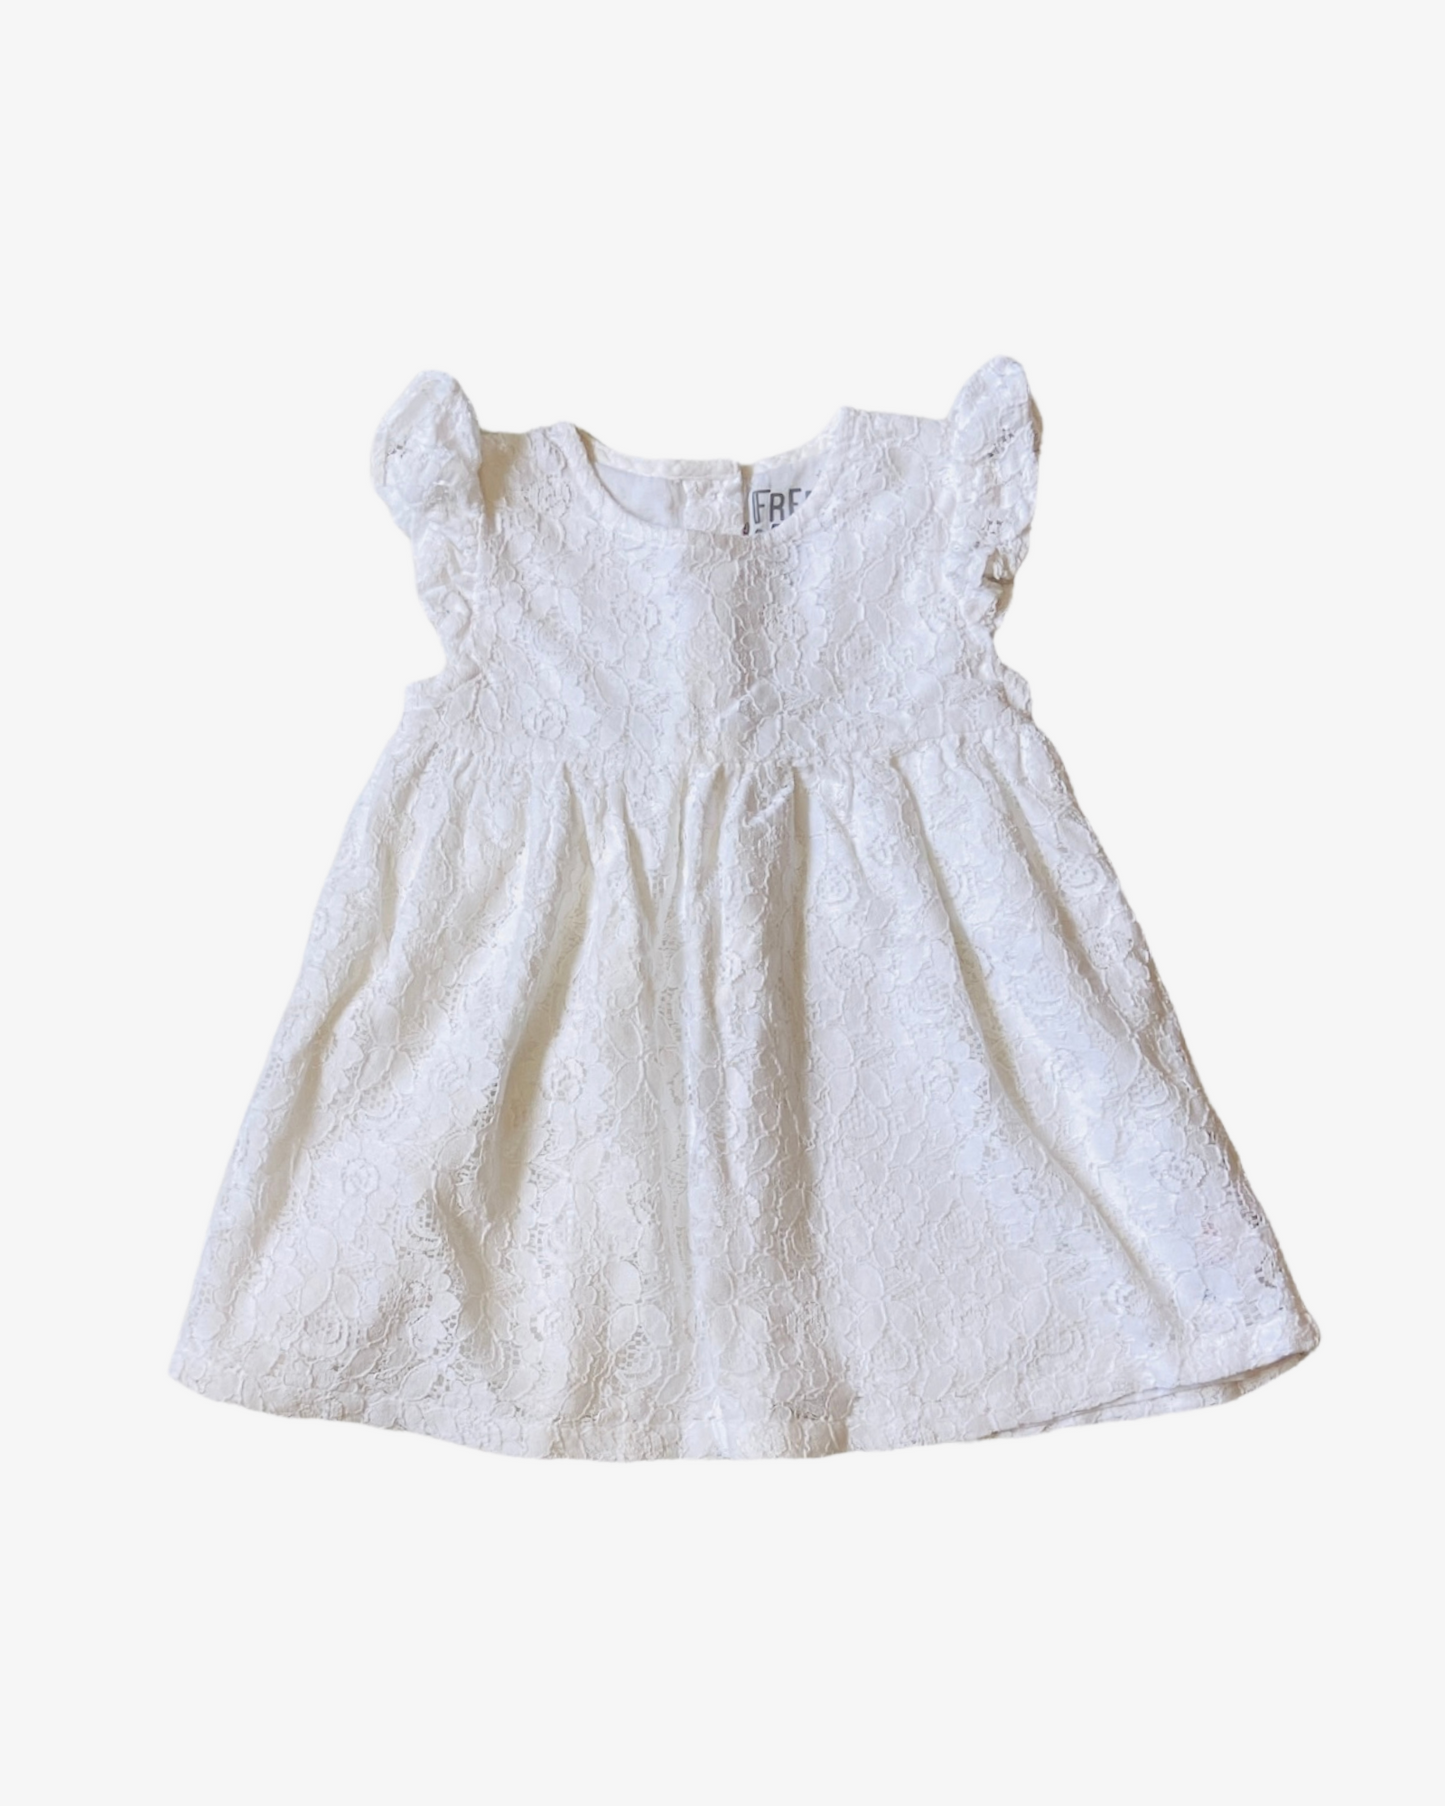 9-12 M White lace dress